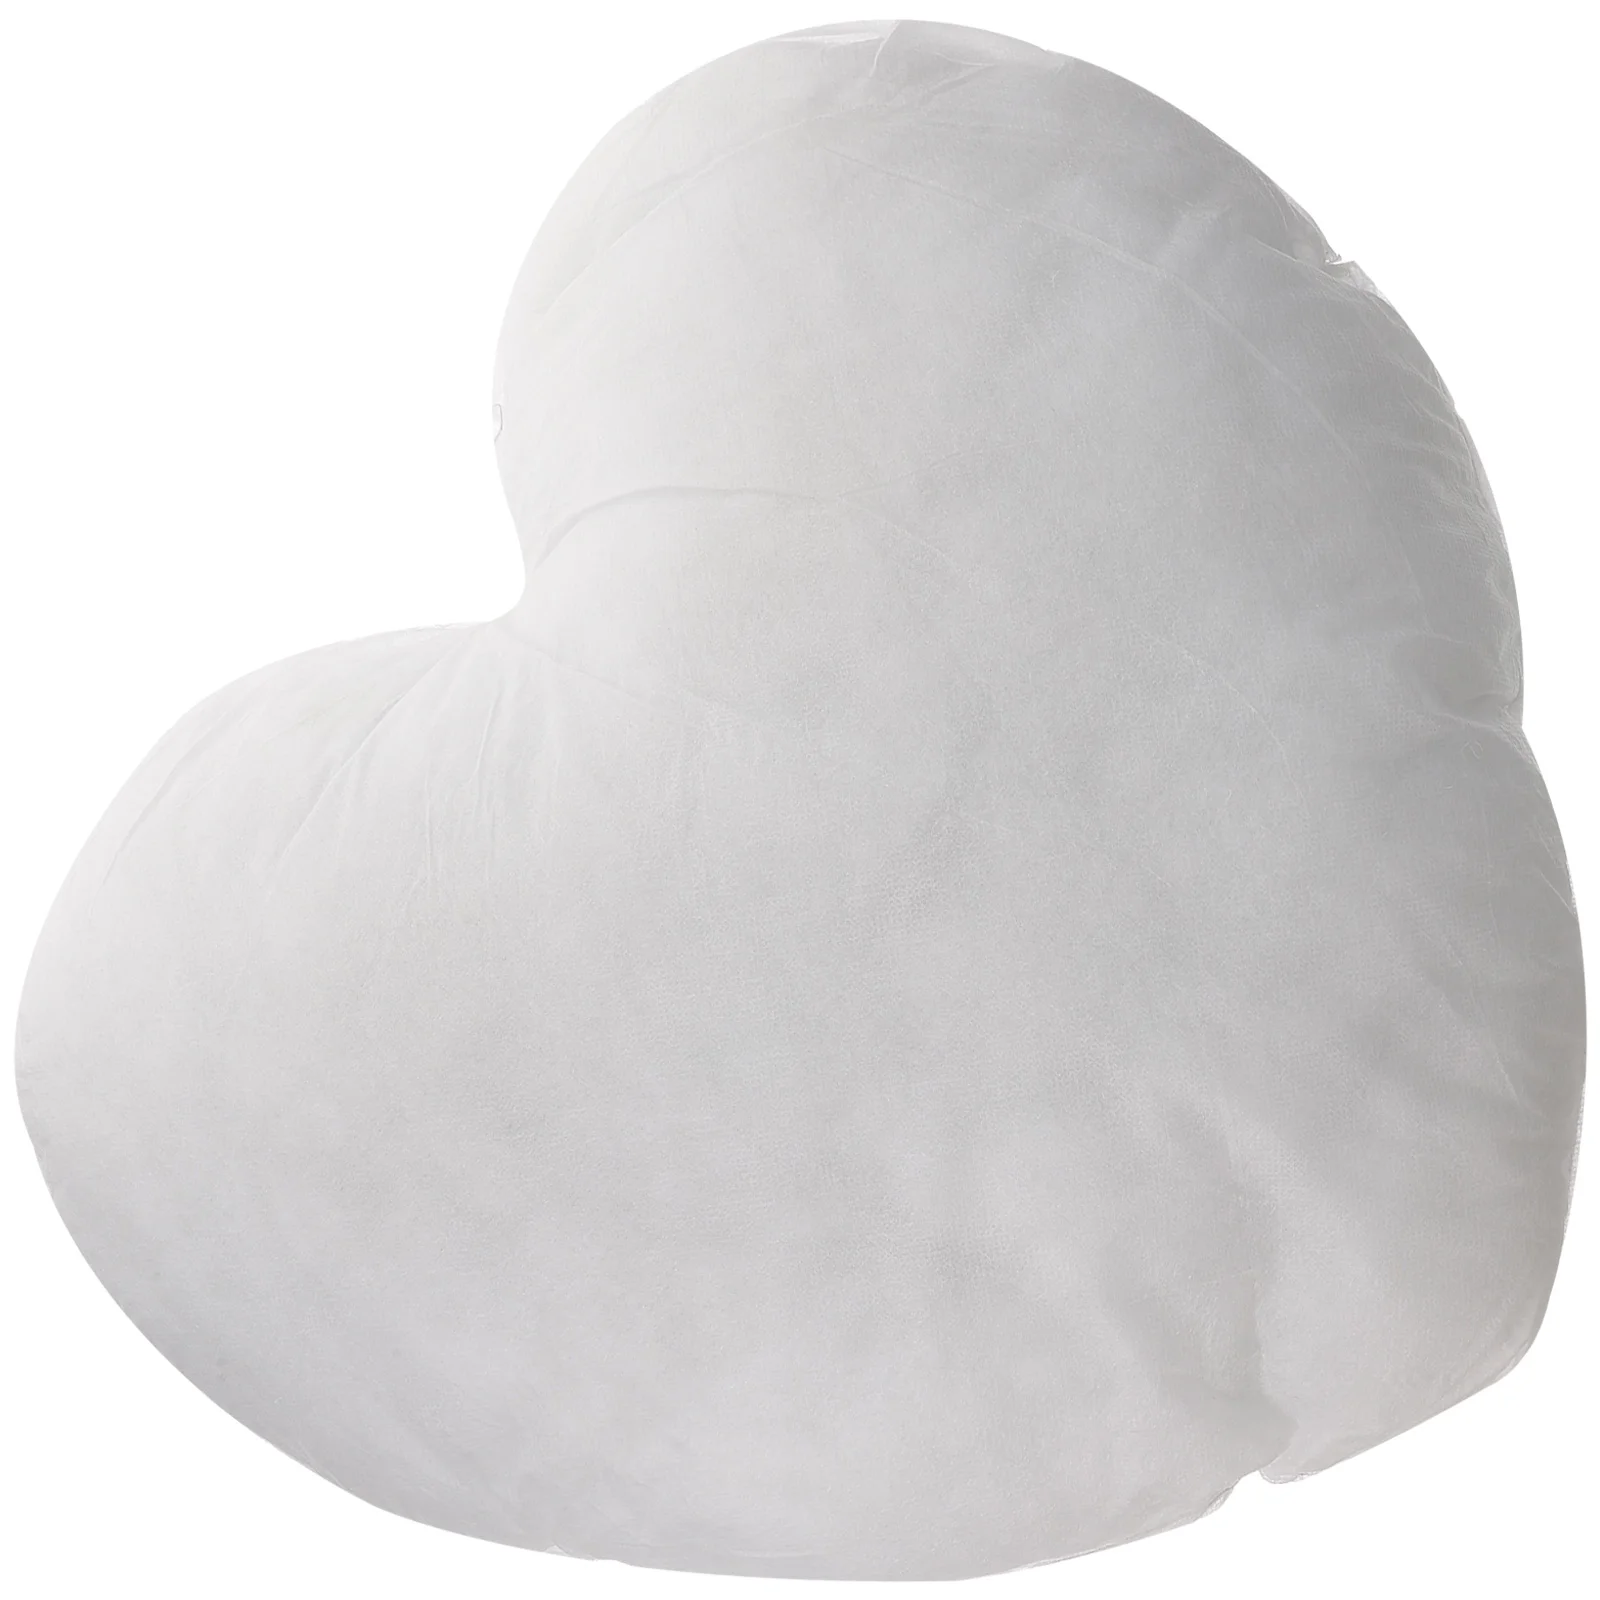 

Peach Heart Pillow Throw Case Stuffer Round Outdoor Chair Decorate Sofa Inner Insert Home Pillowcase Polyester